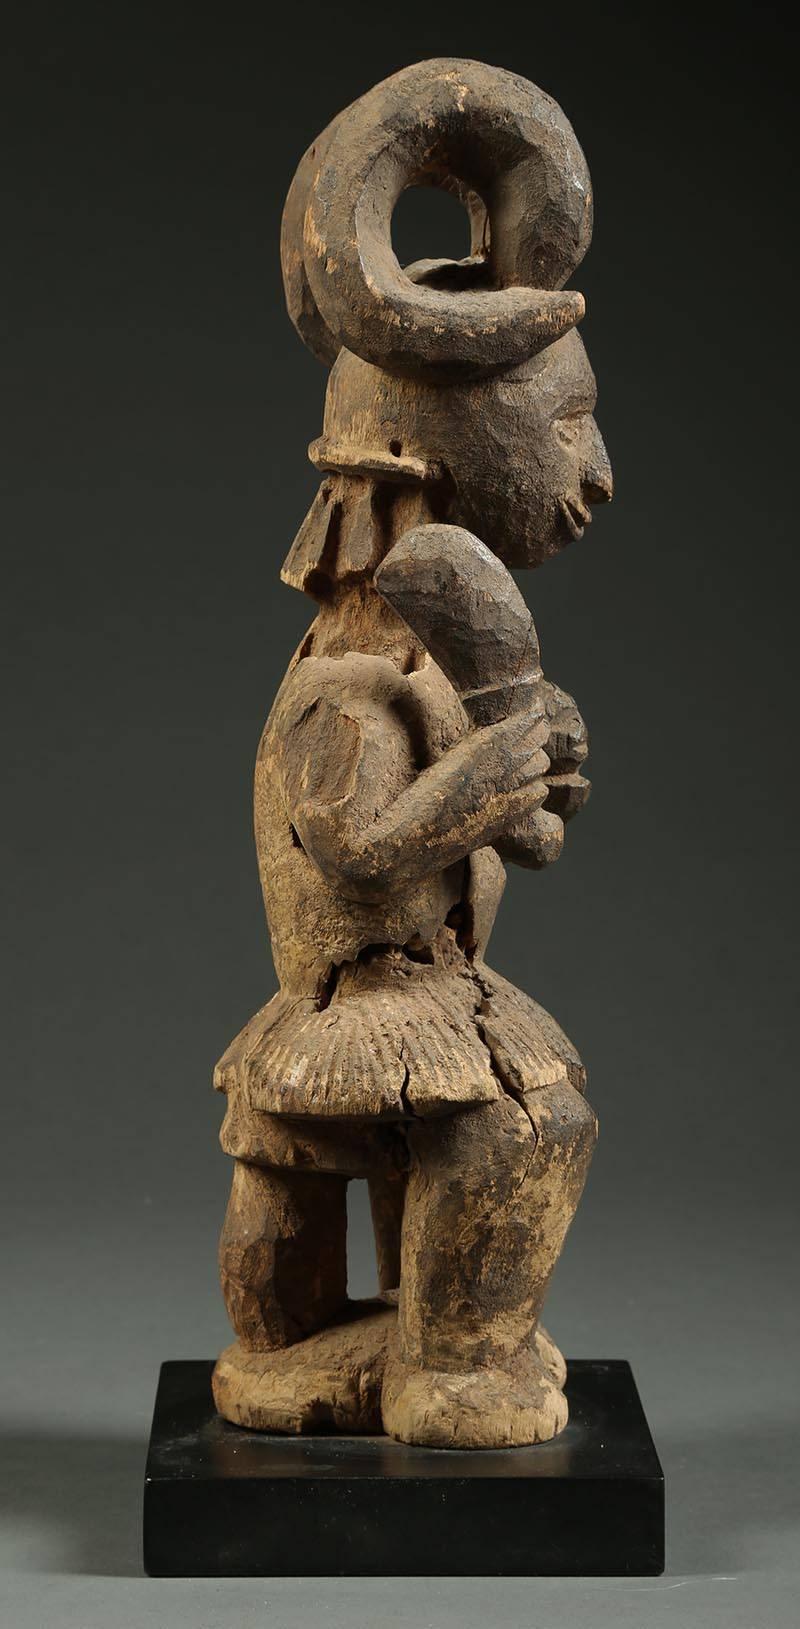 Hand-Carved Igbo Tribal Seated Ikenga Figure with Sword and Head Africa, Nigeria